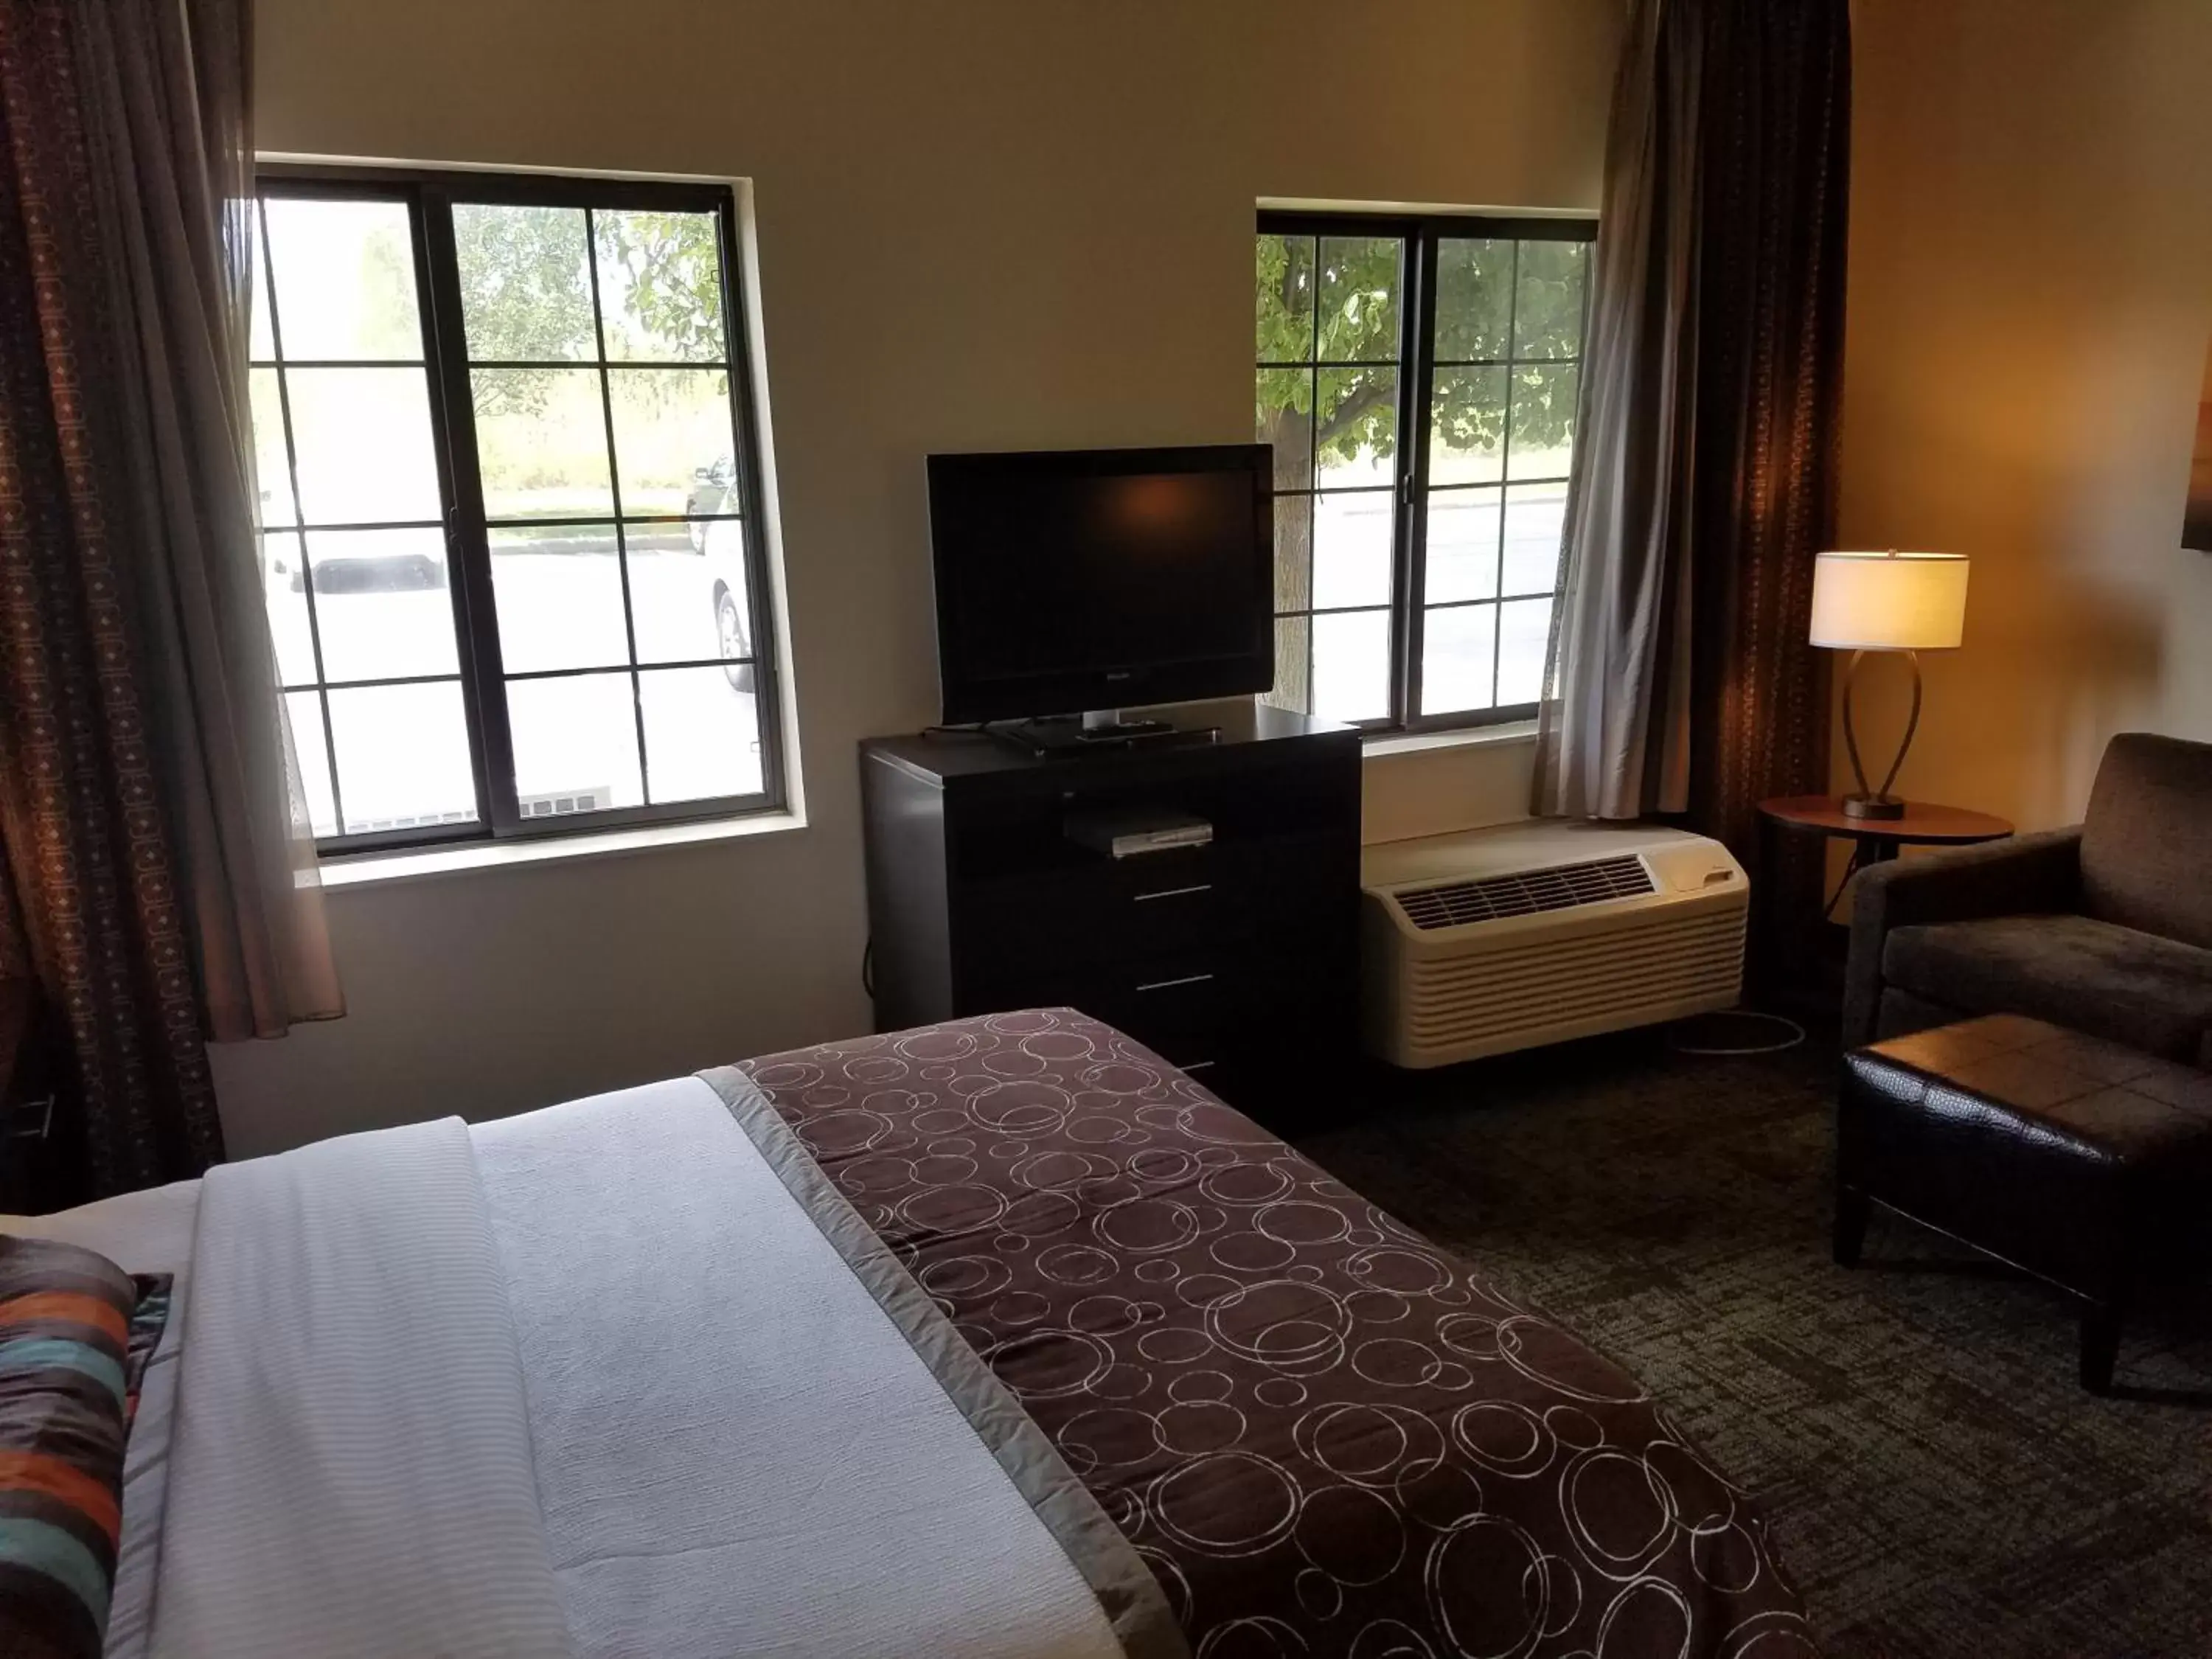 Bed, Room Photo in Staybridge Suites - Cincinnati North, an IHG Hotel